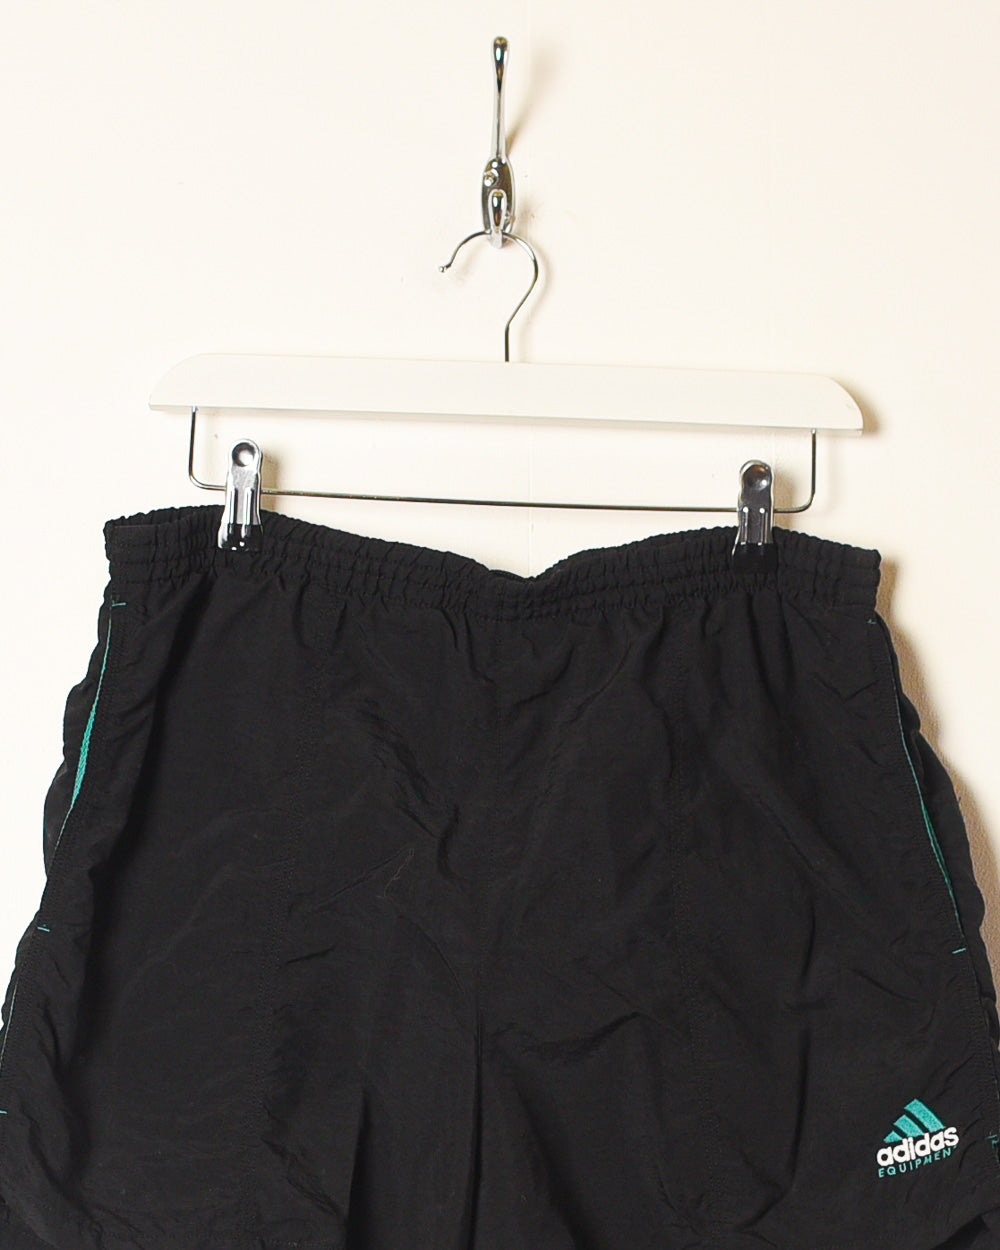 Black Adidas Equipment Shorts - Small